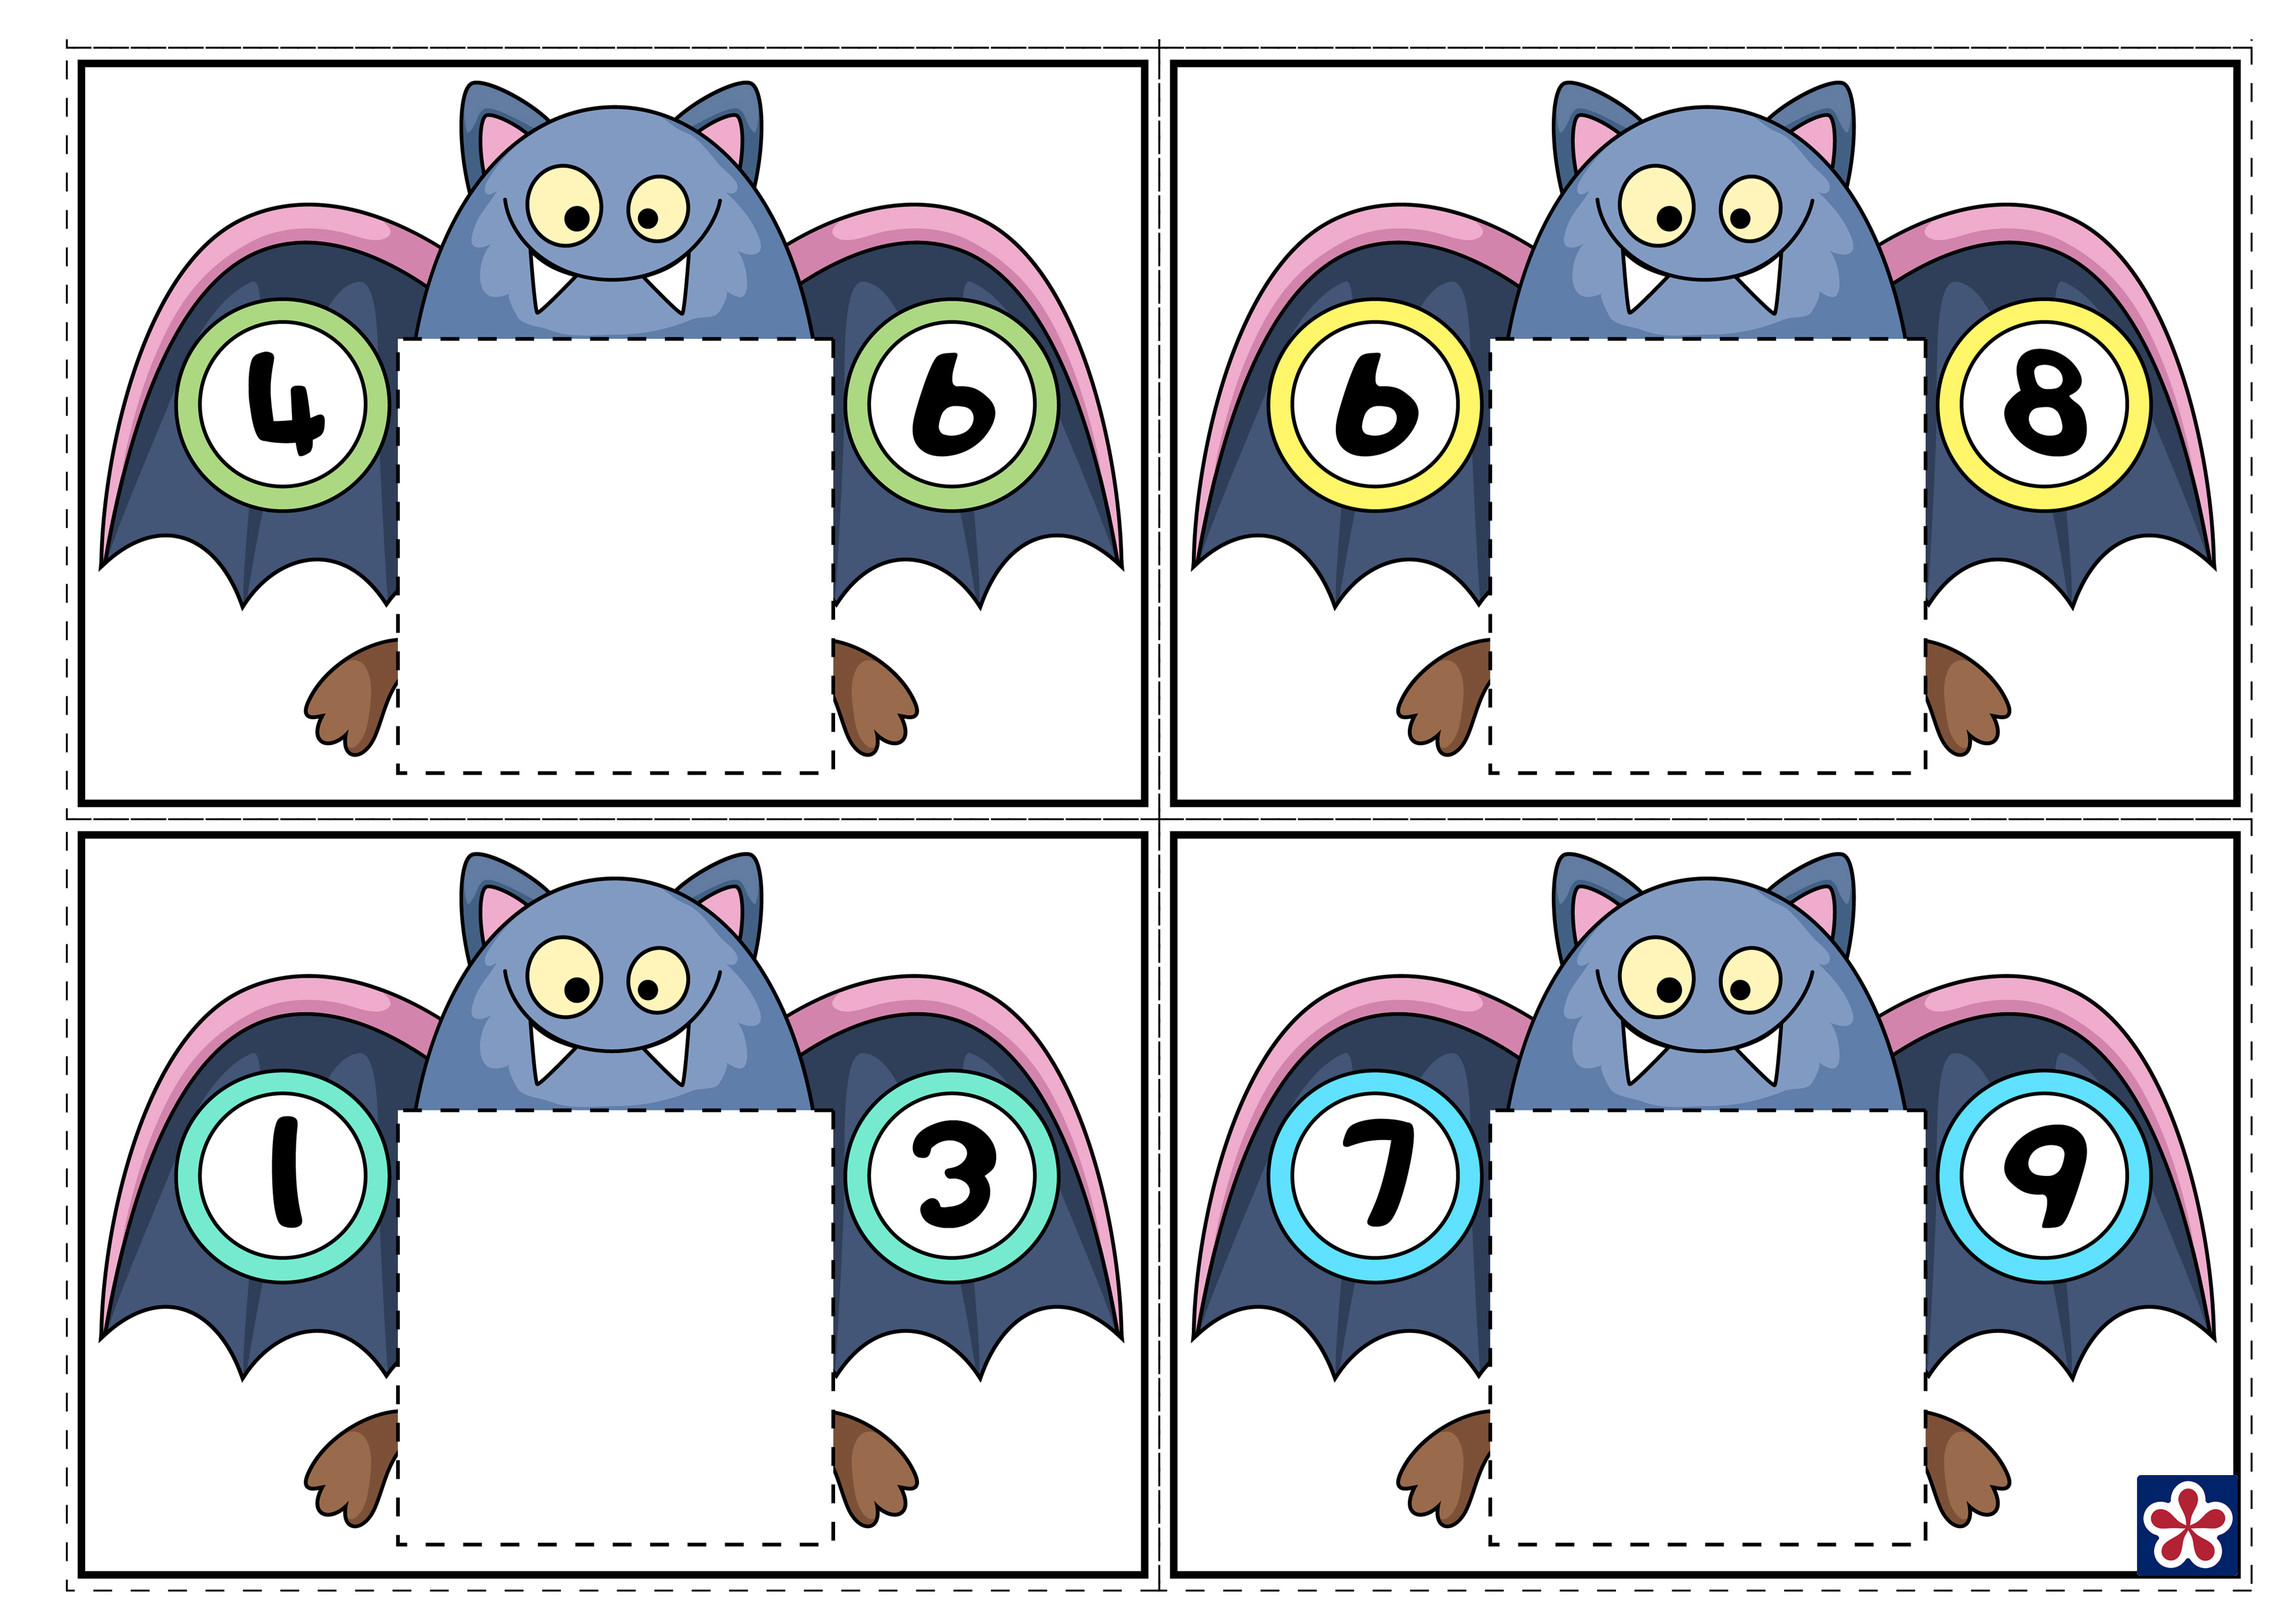 Bat-Themed Counting Worksheets for Preschool. TeachersMag.com